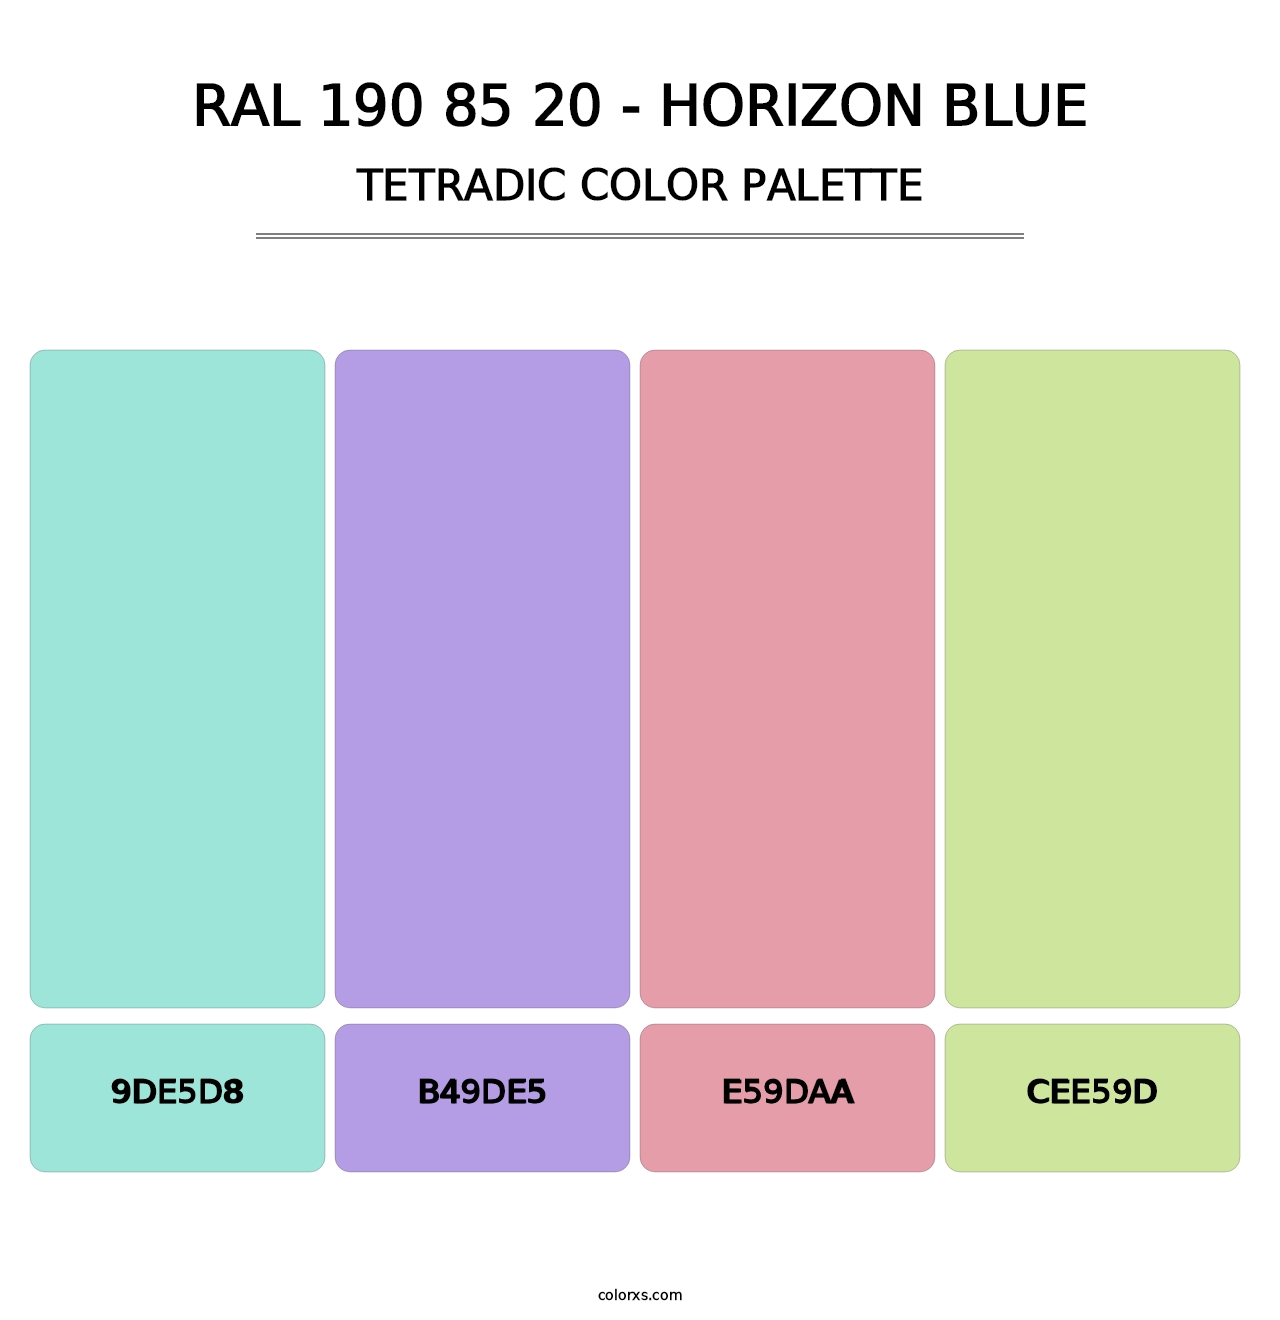 RAL 190 85 20 - Horizon Blue - Tetradic Color Palette